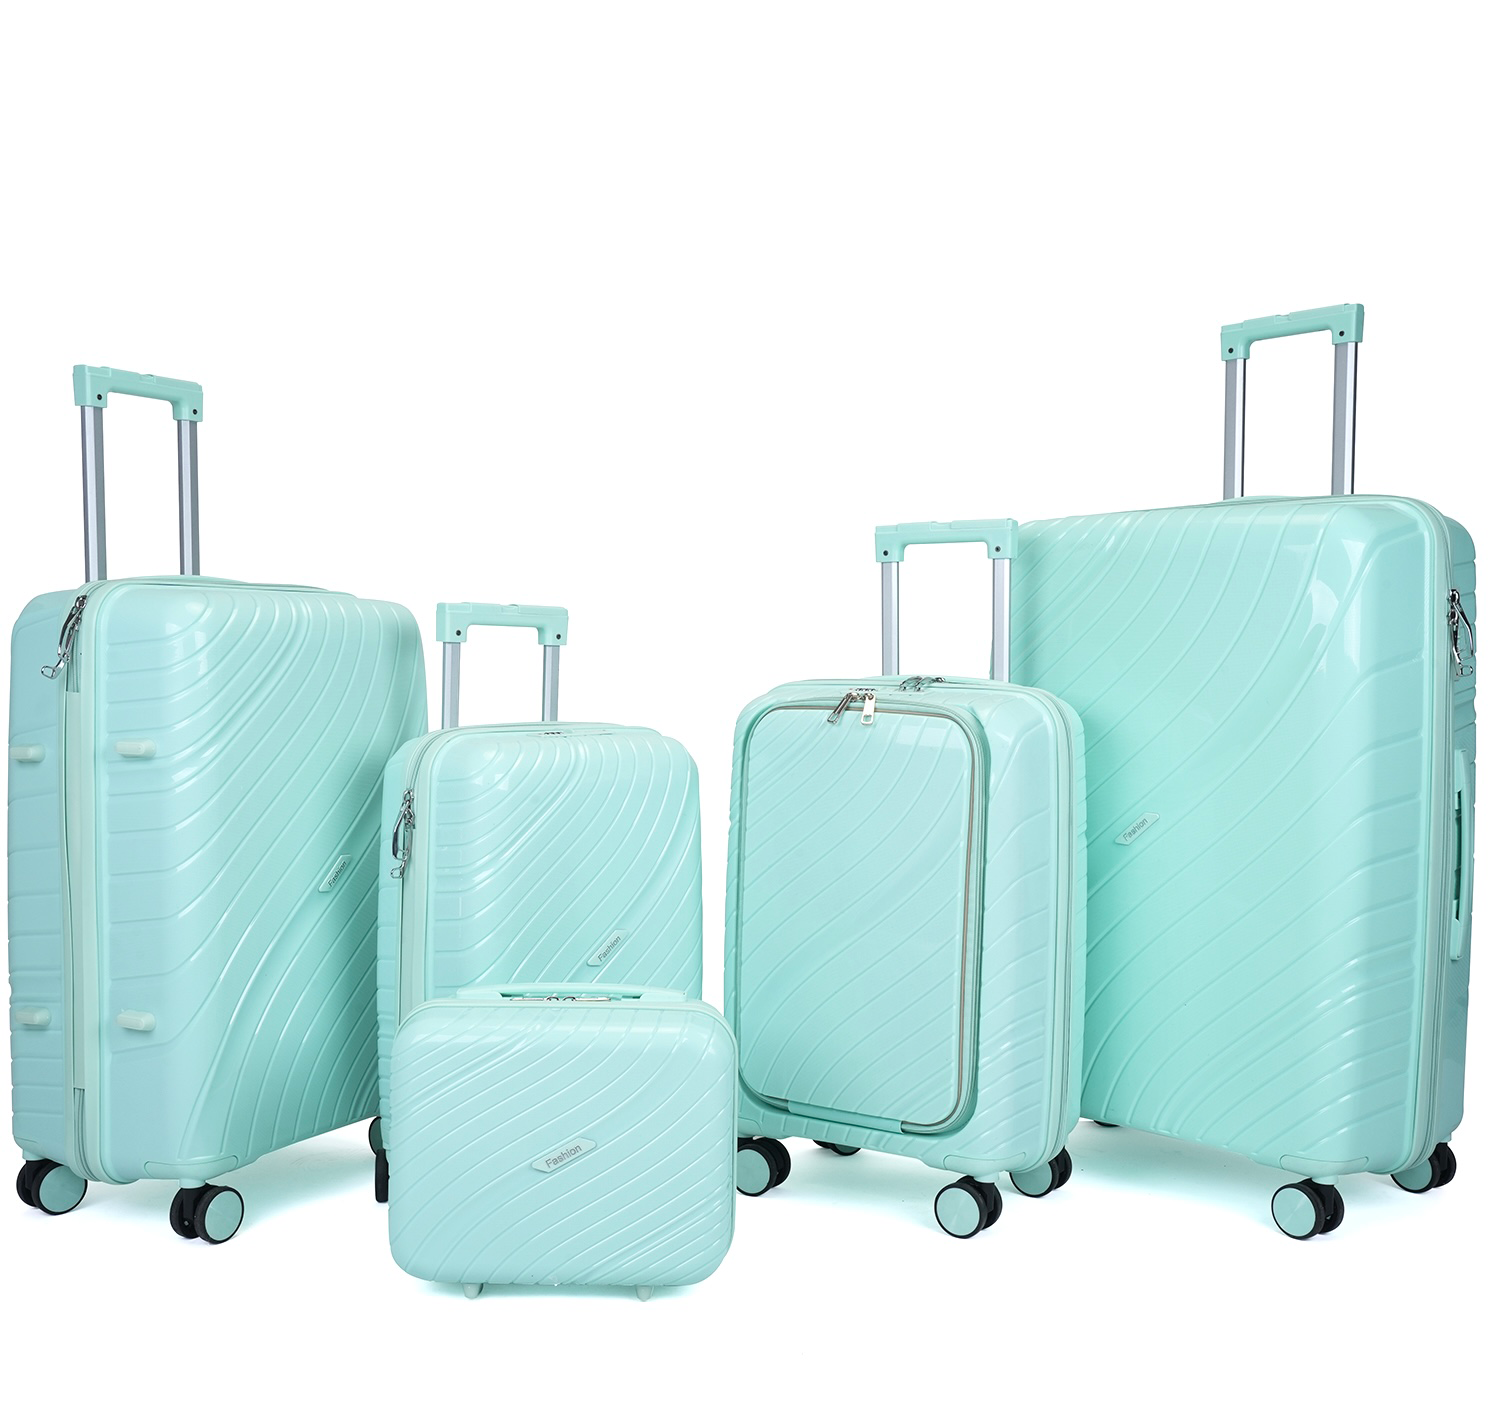 Marksman New Style Hot Sale PP Luggage Set High Quality Suitcase Set 